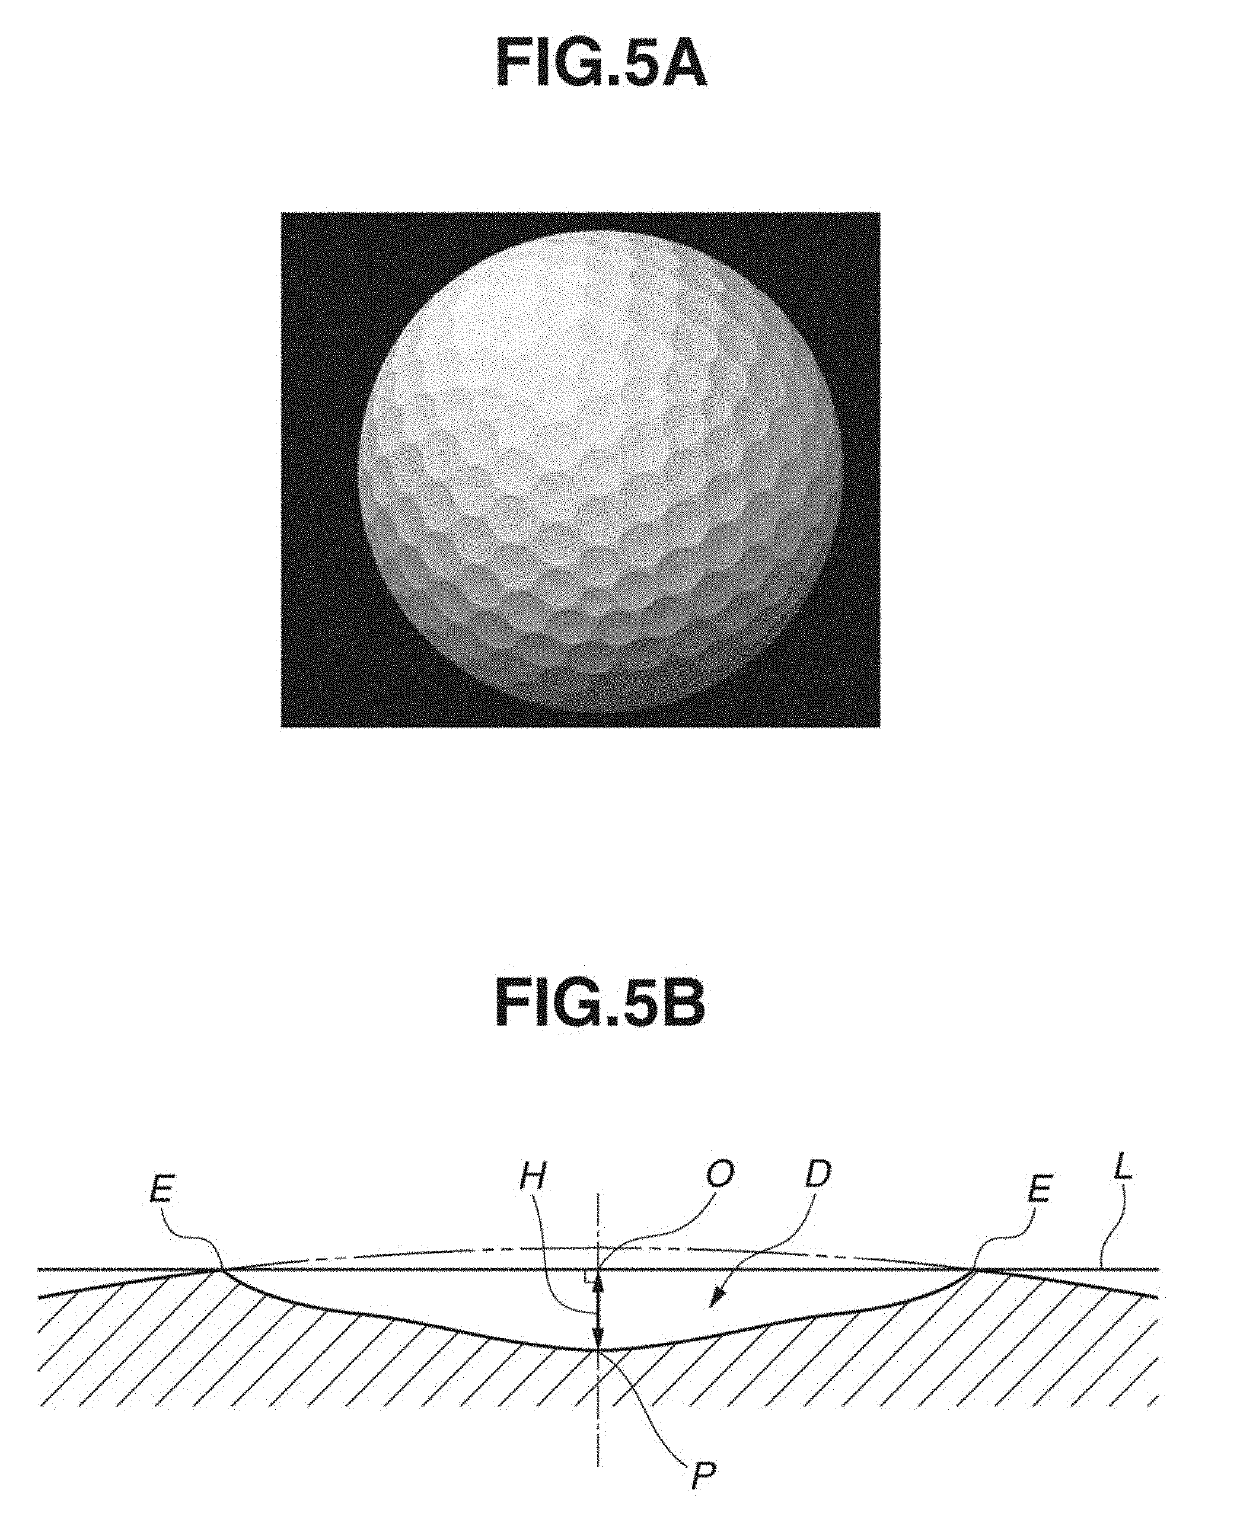 Multi-piece solid golf ball